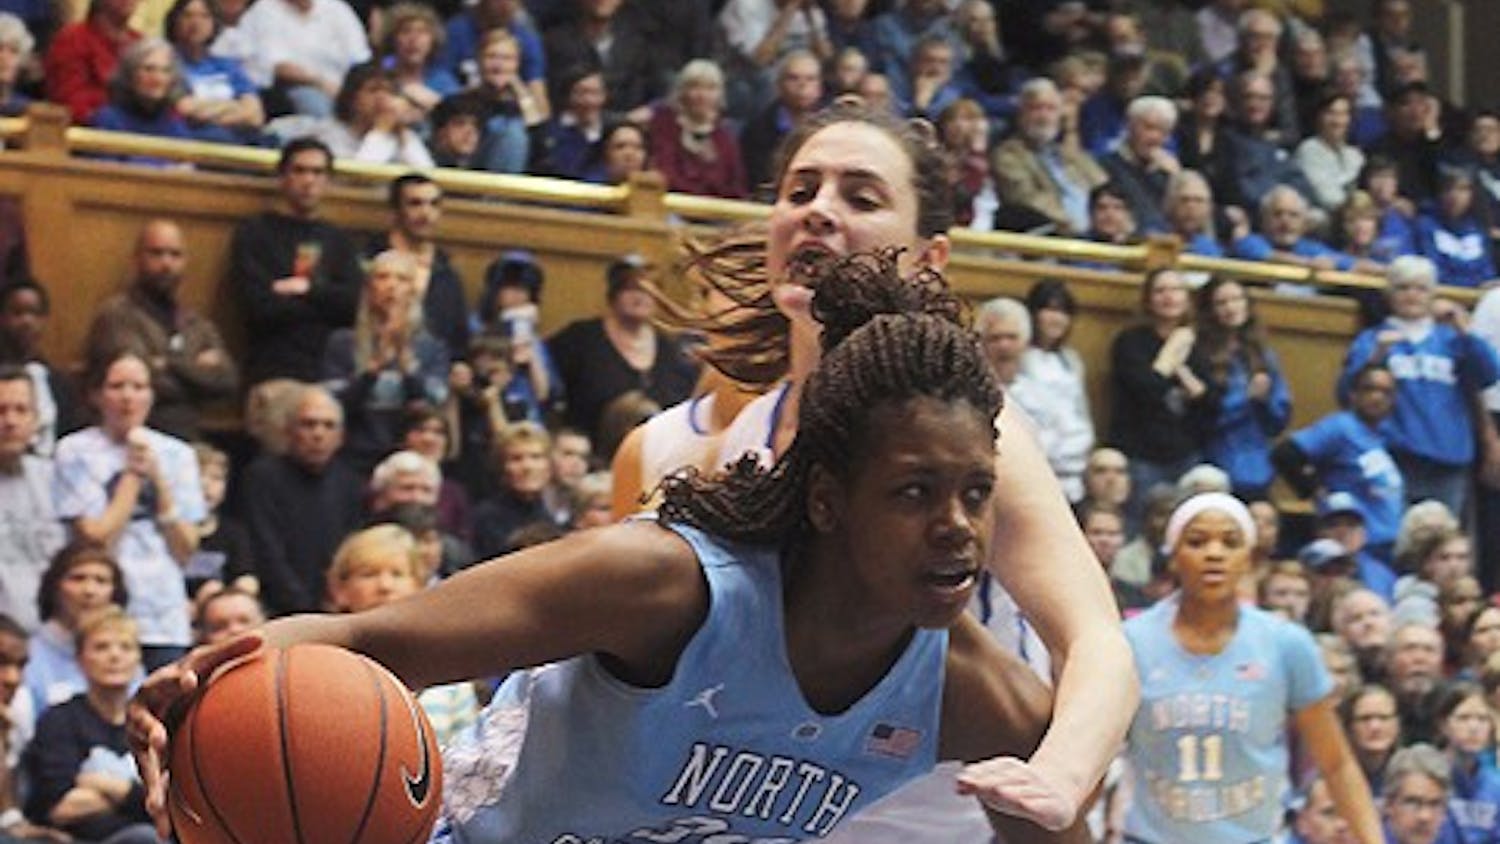 The UNC Women's basketball team lost to Duke at Cameron Indoor Stadium on Sunday night.